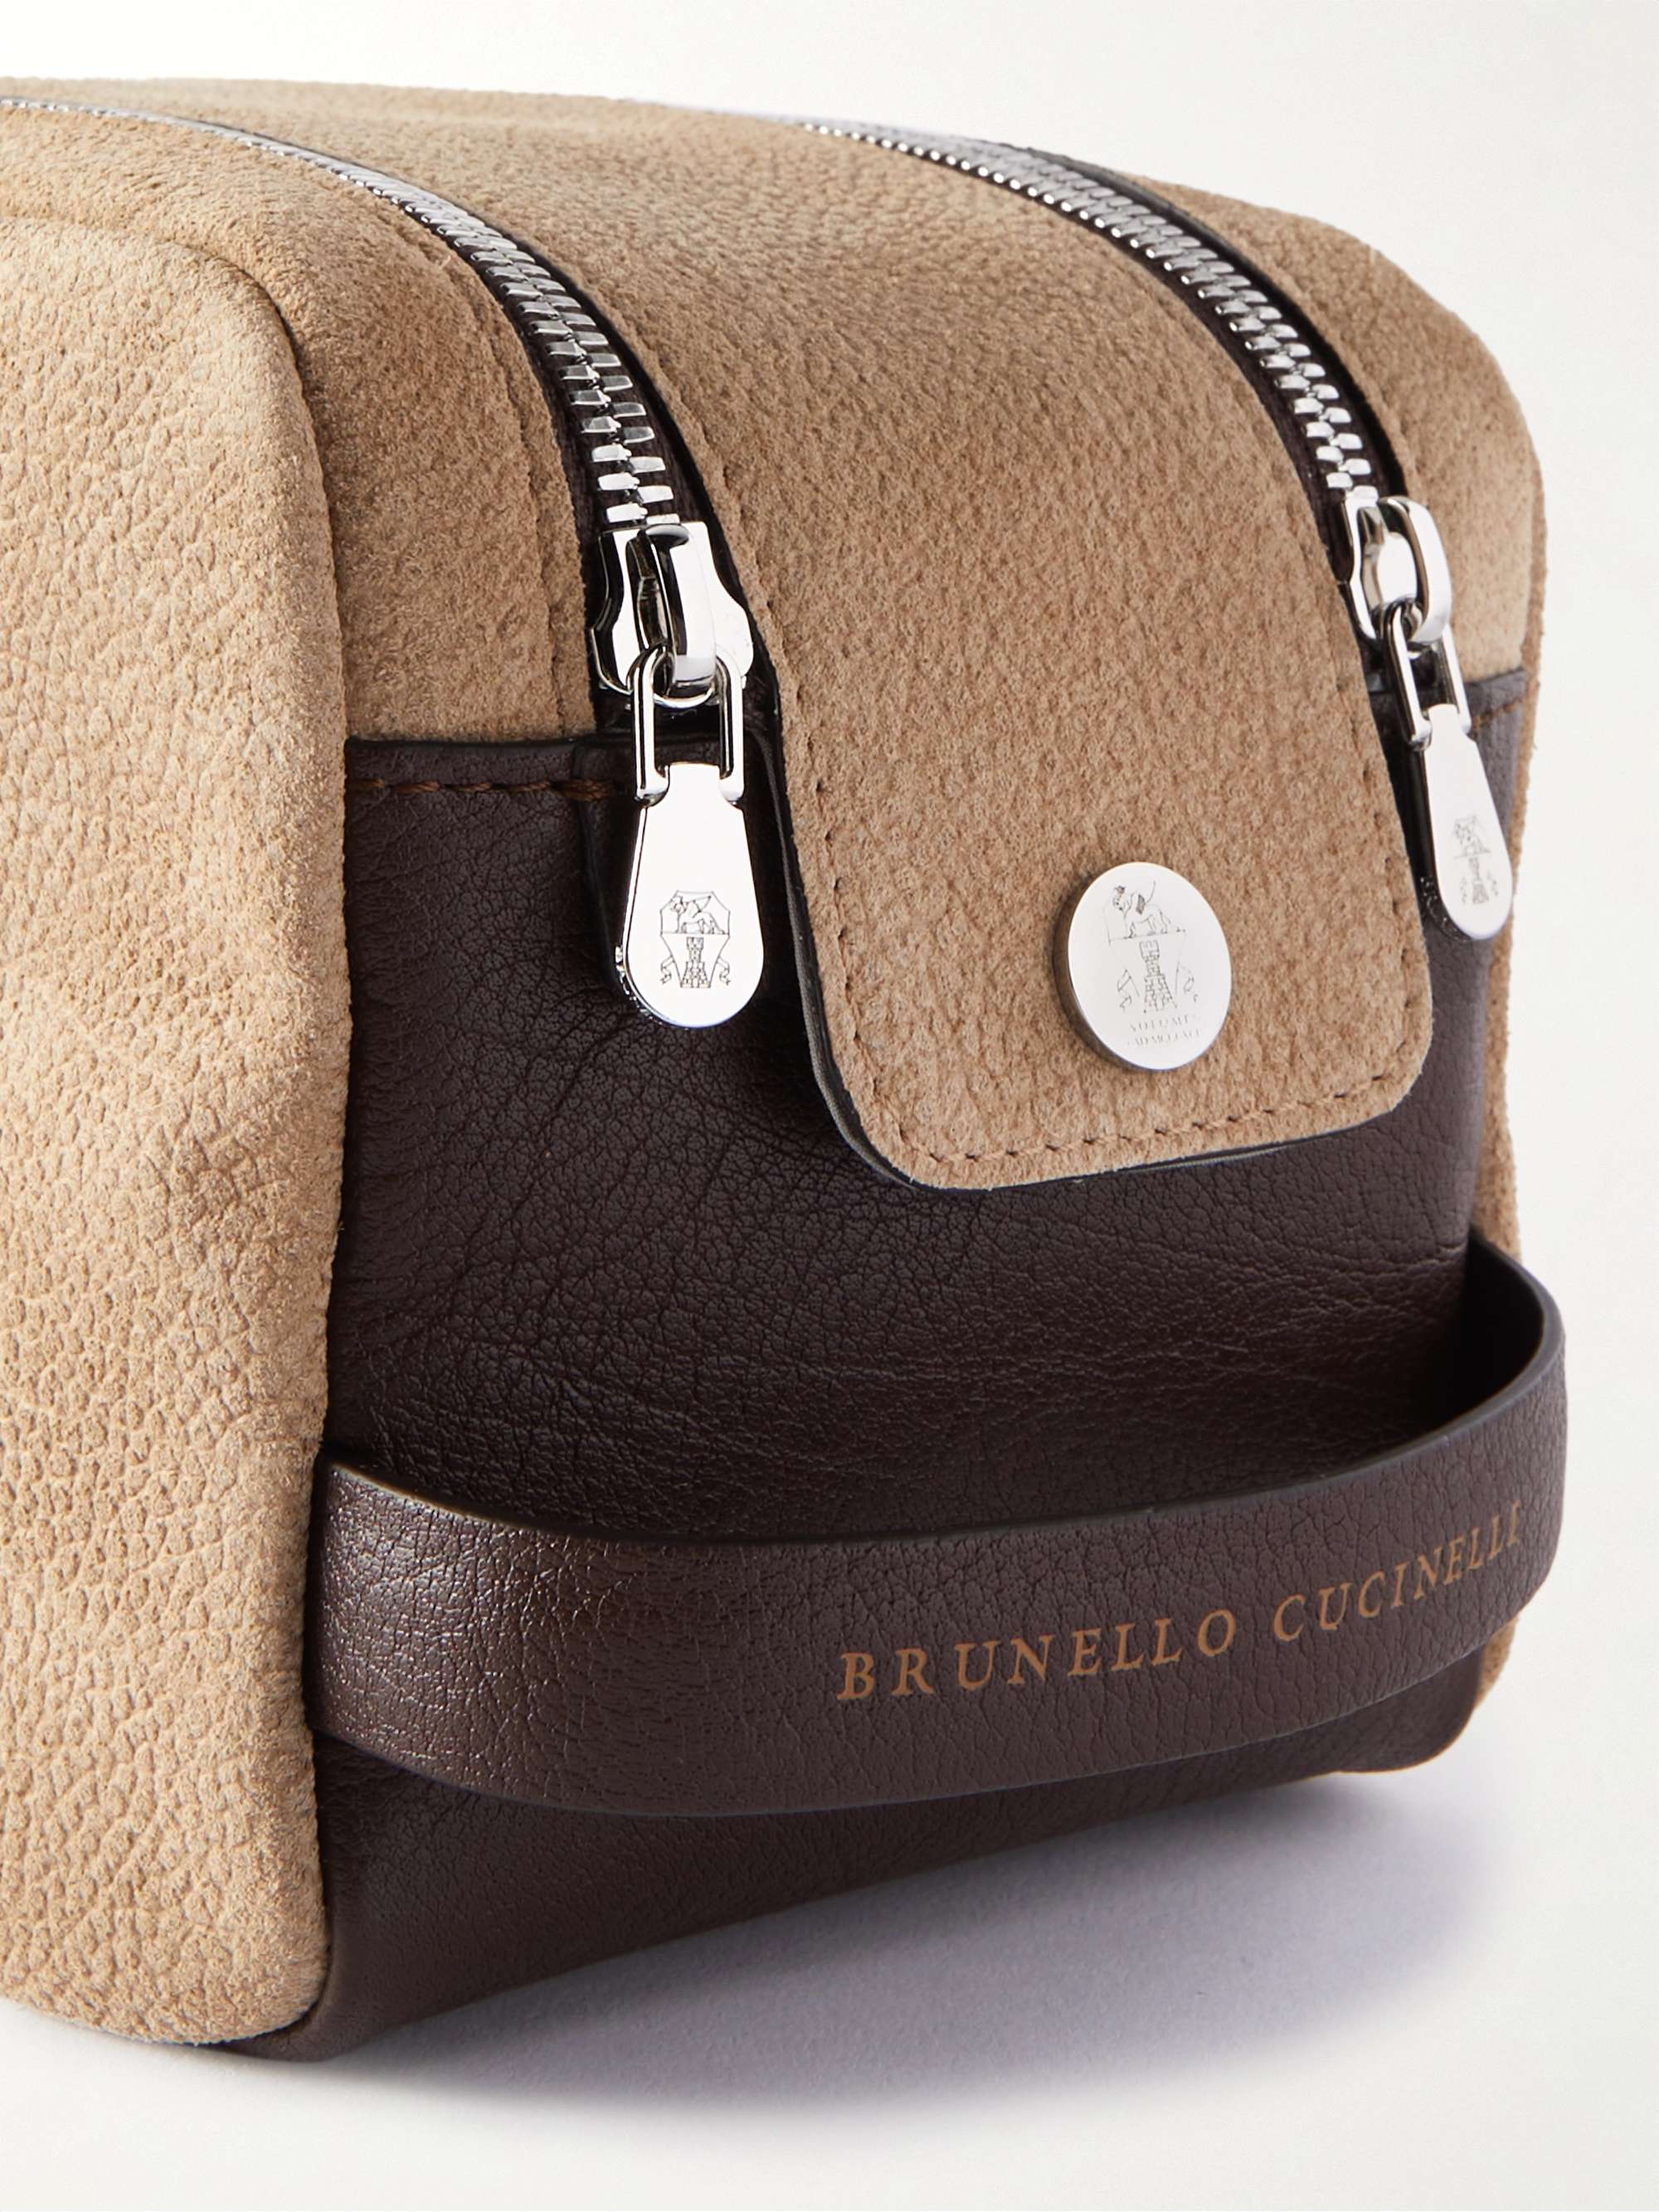 BRUNELLO CUCINELLI Leather-Trimmed Suede Wash Bag